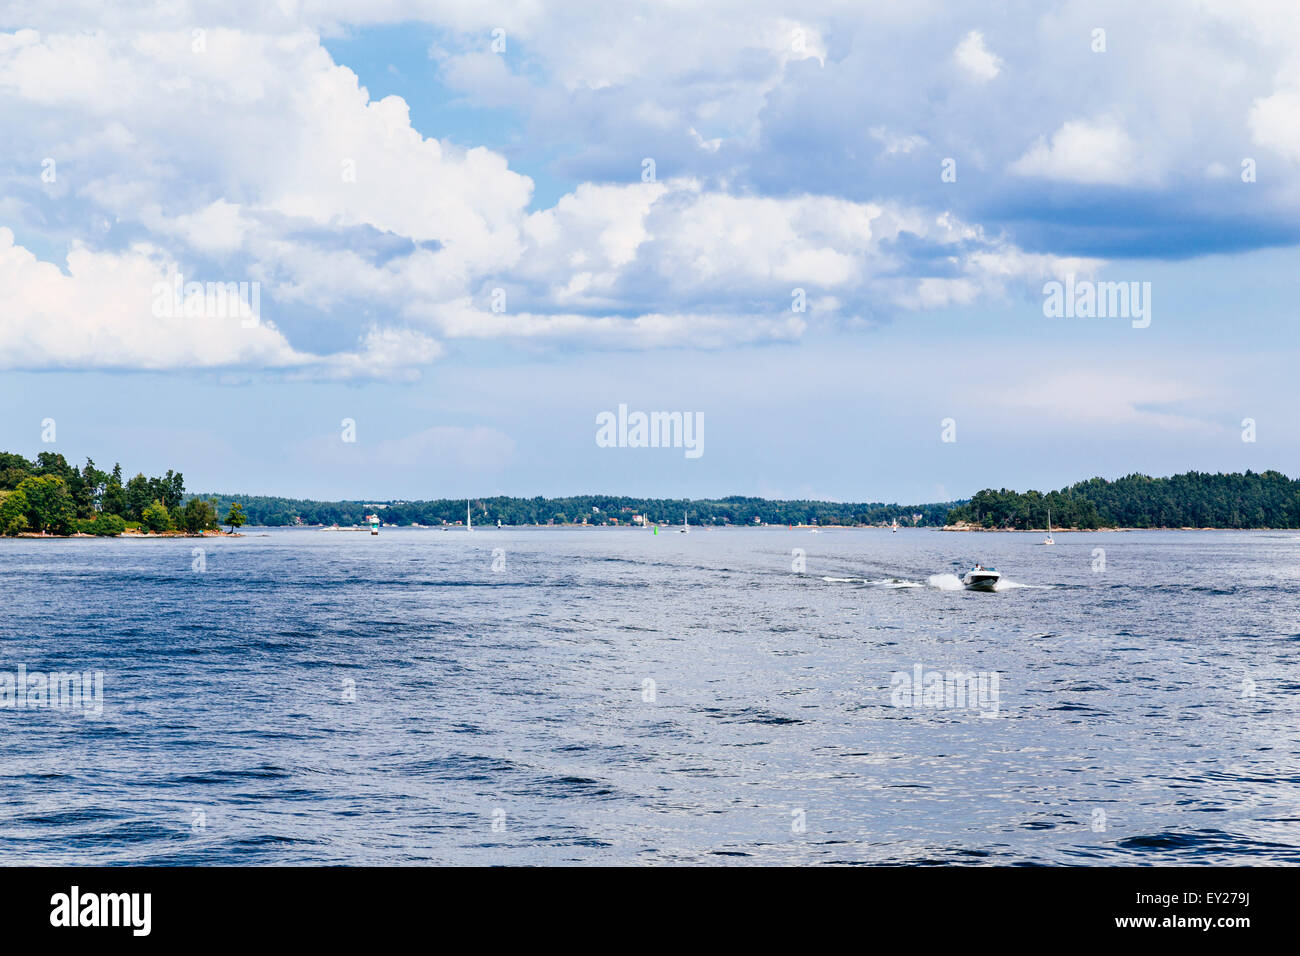 Stockholm archipelago in summer, Sweden Stock Photo